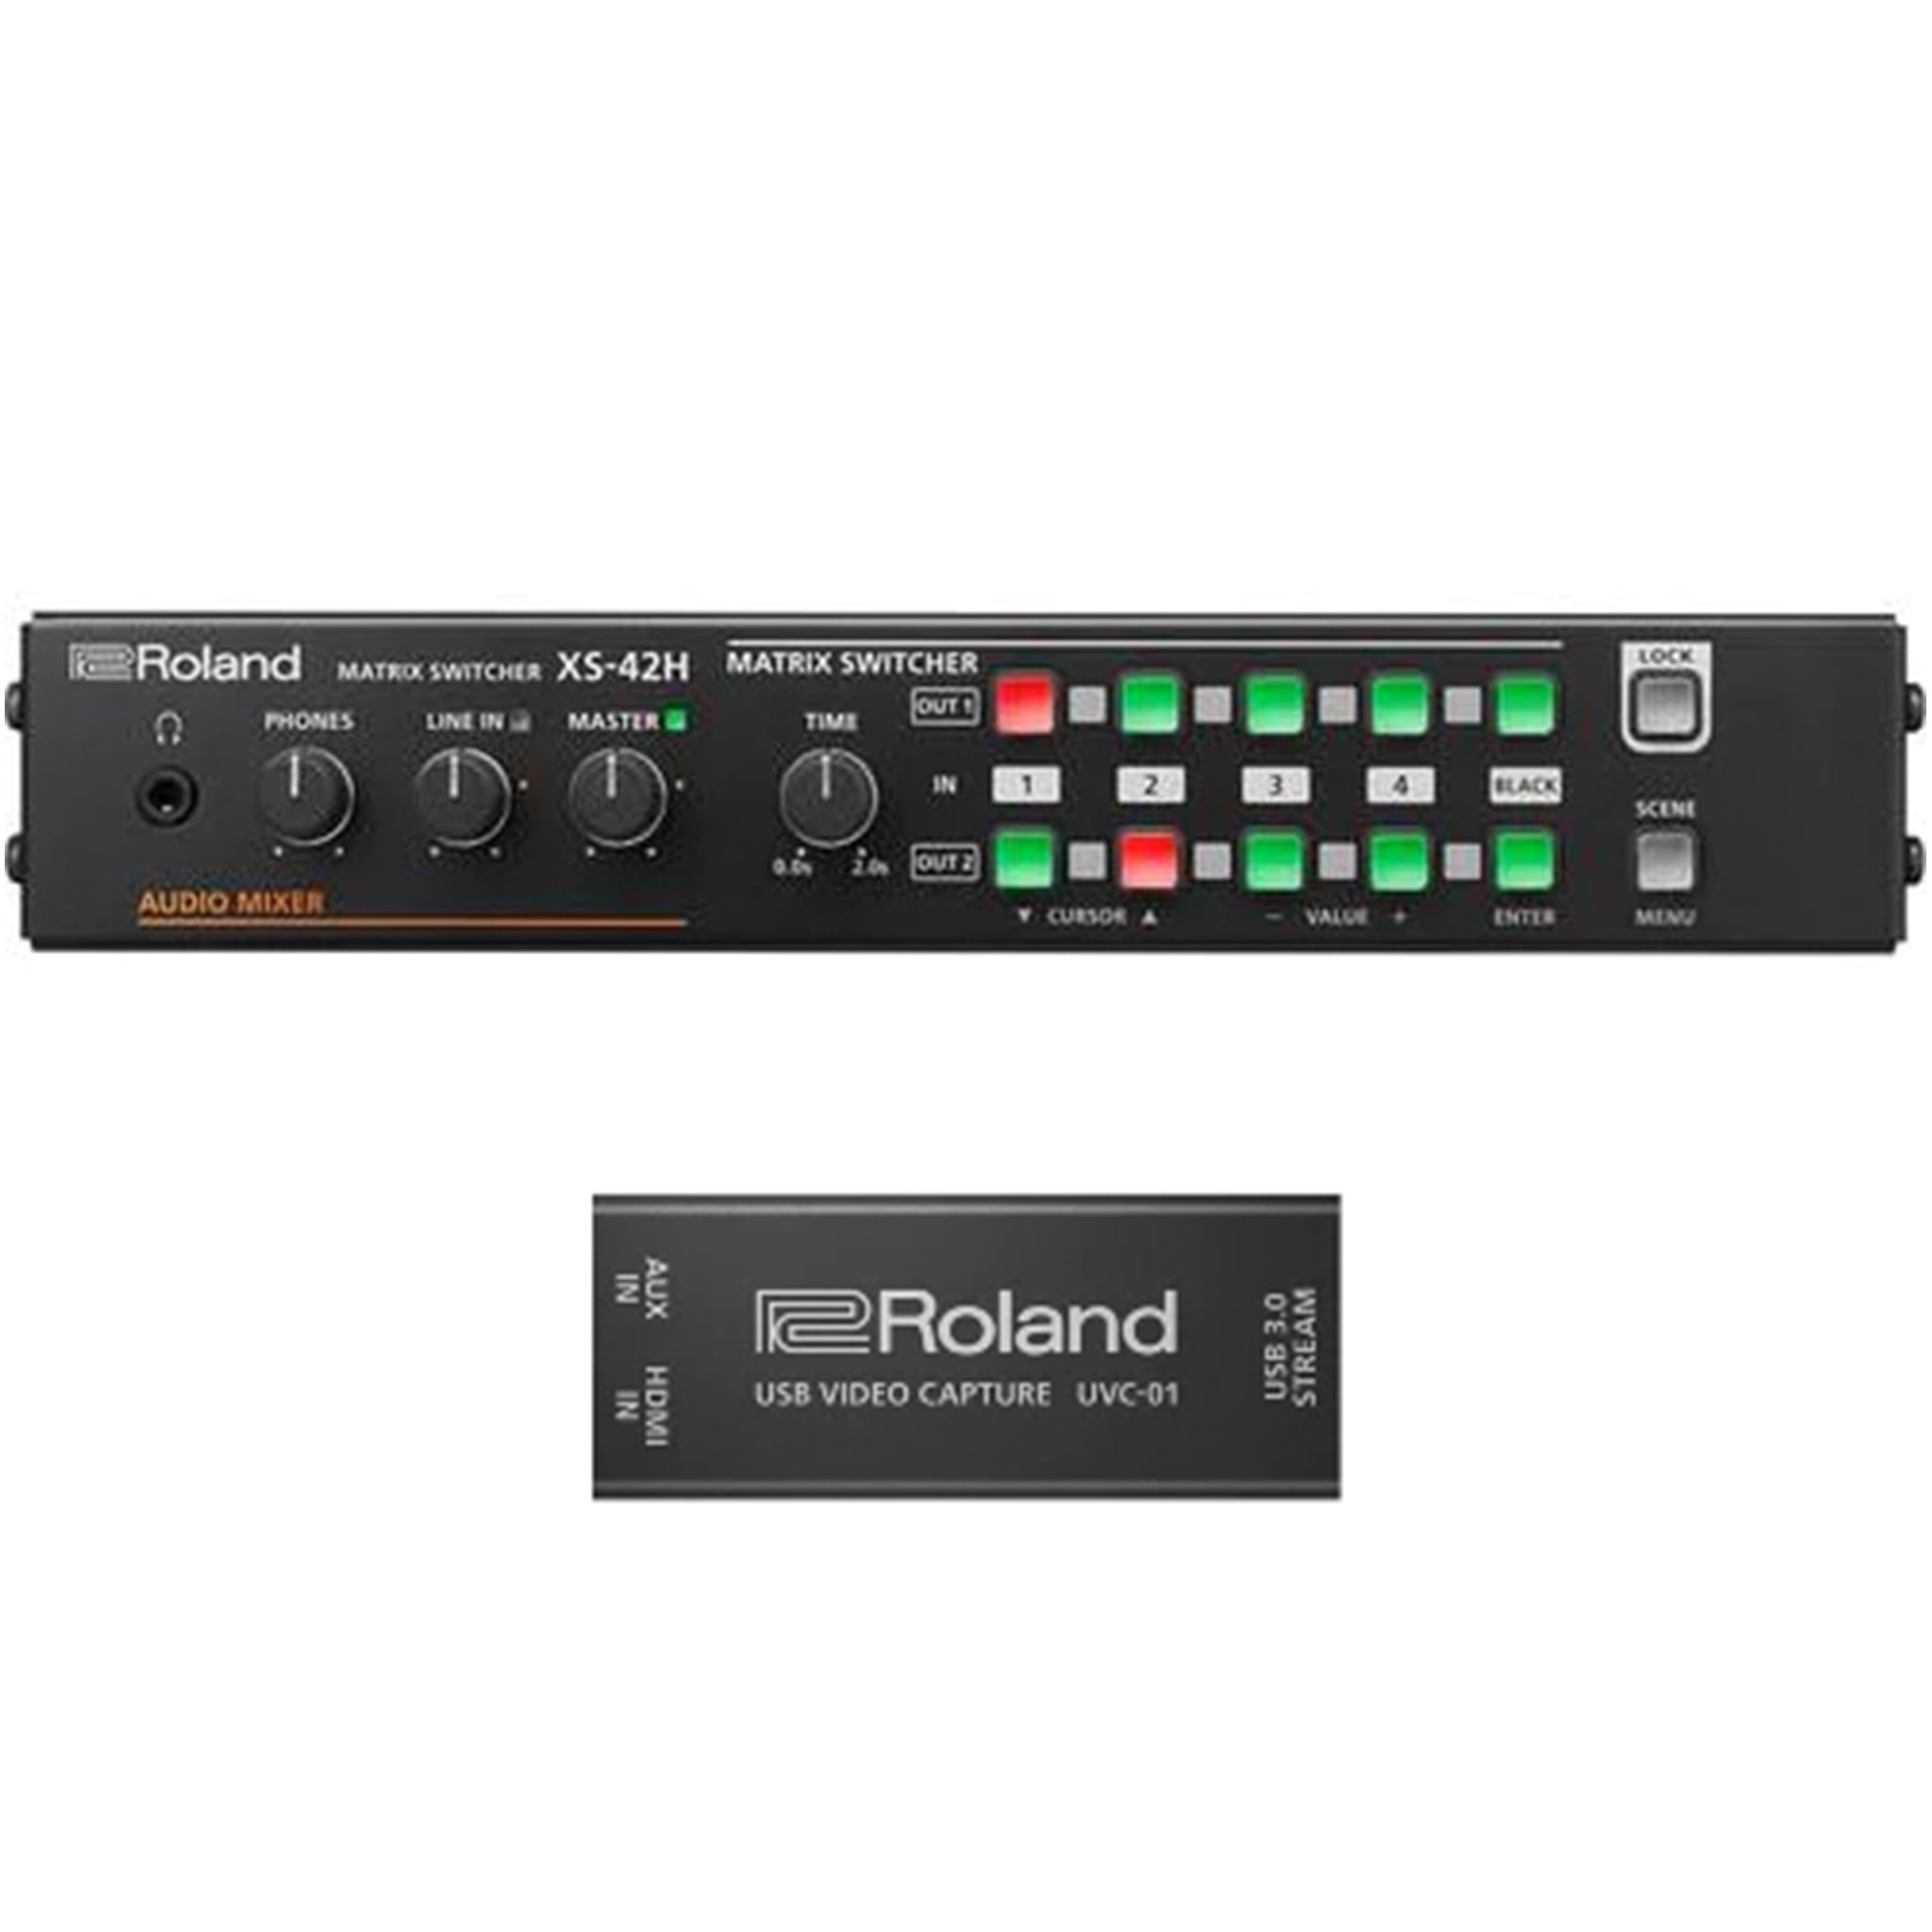 Roland XS-42H Compact Digital Matrix Switcher